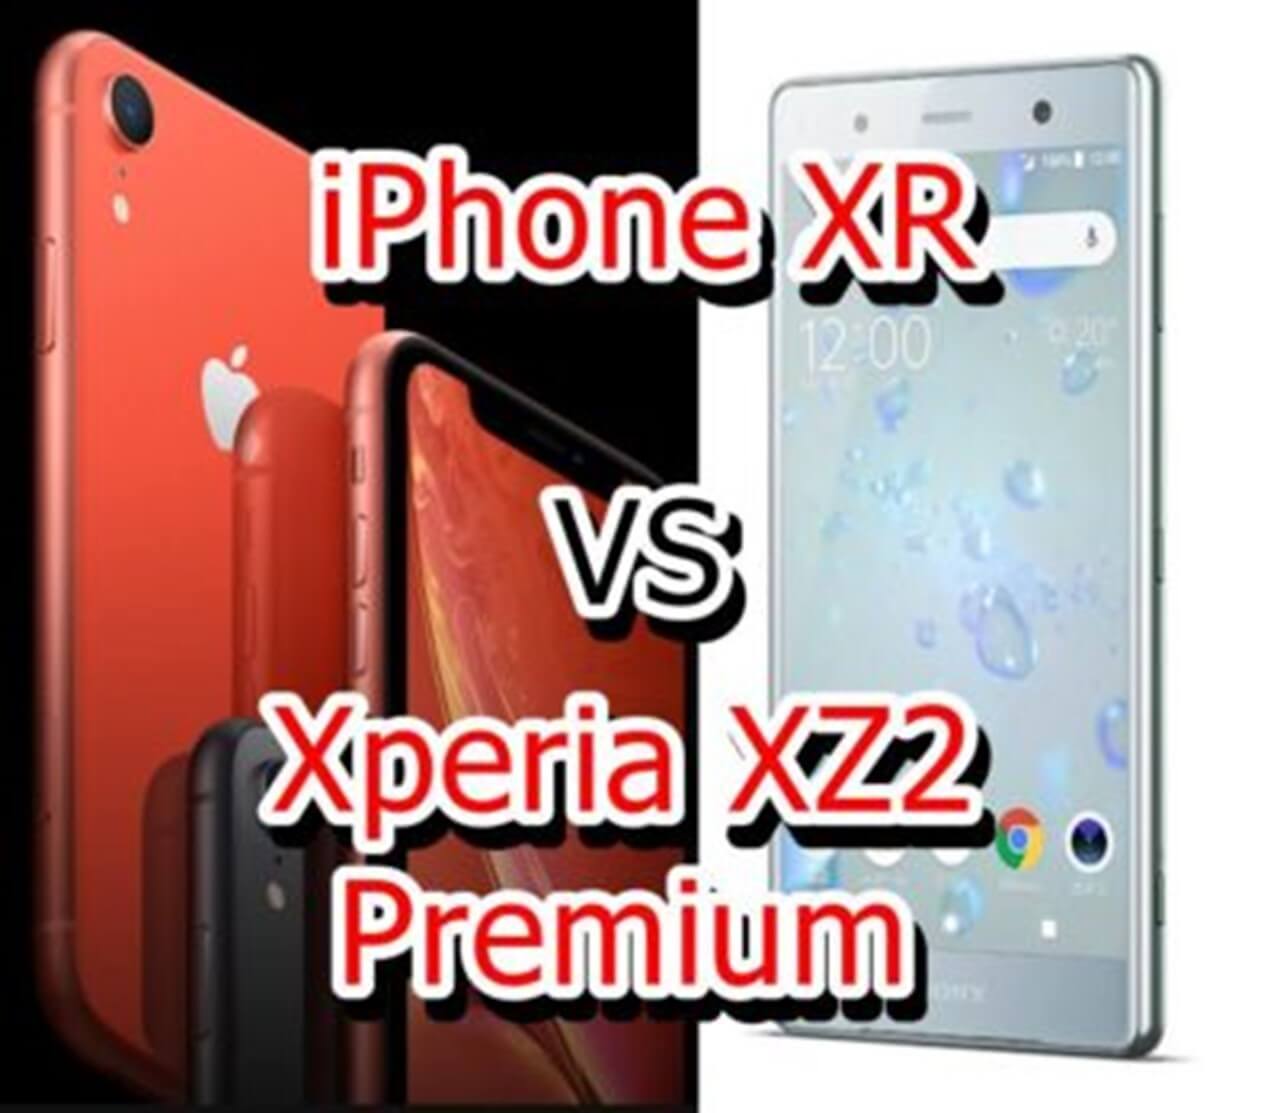 s-iPhone XR vs s Xperia XZ2 Premium